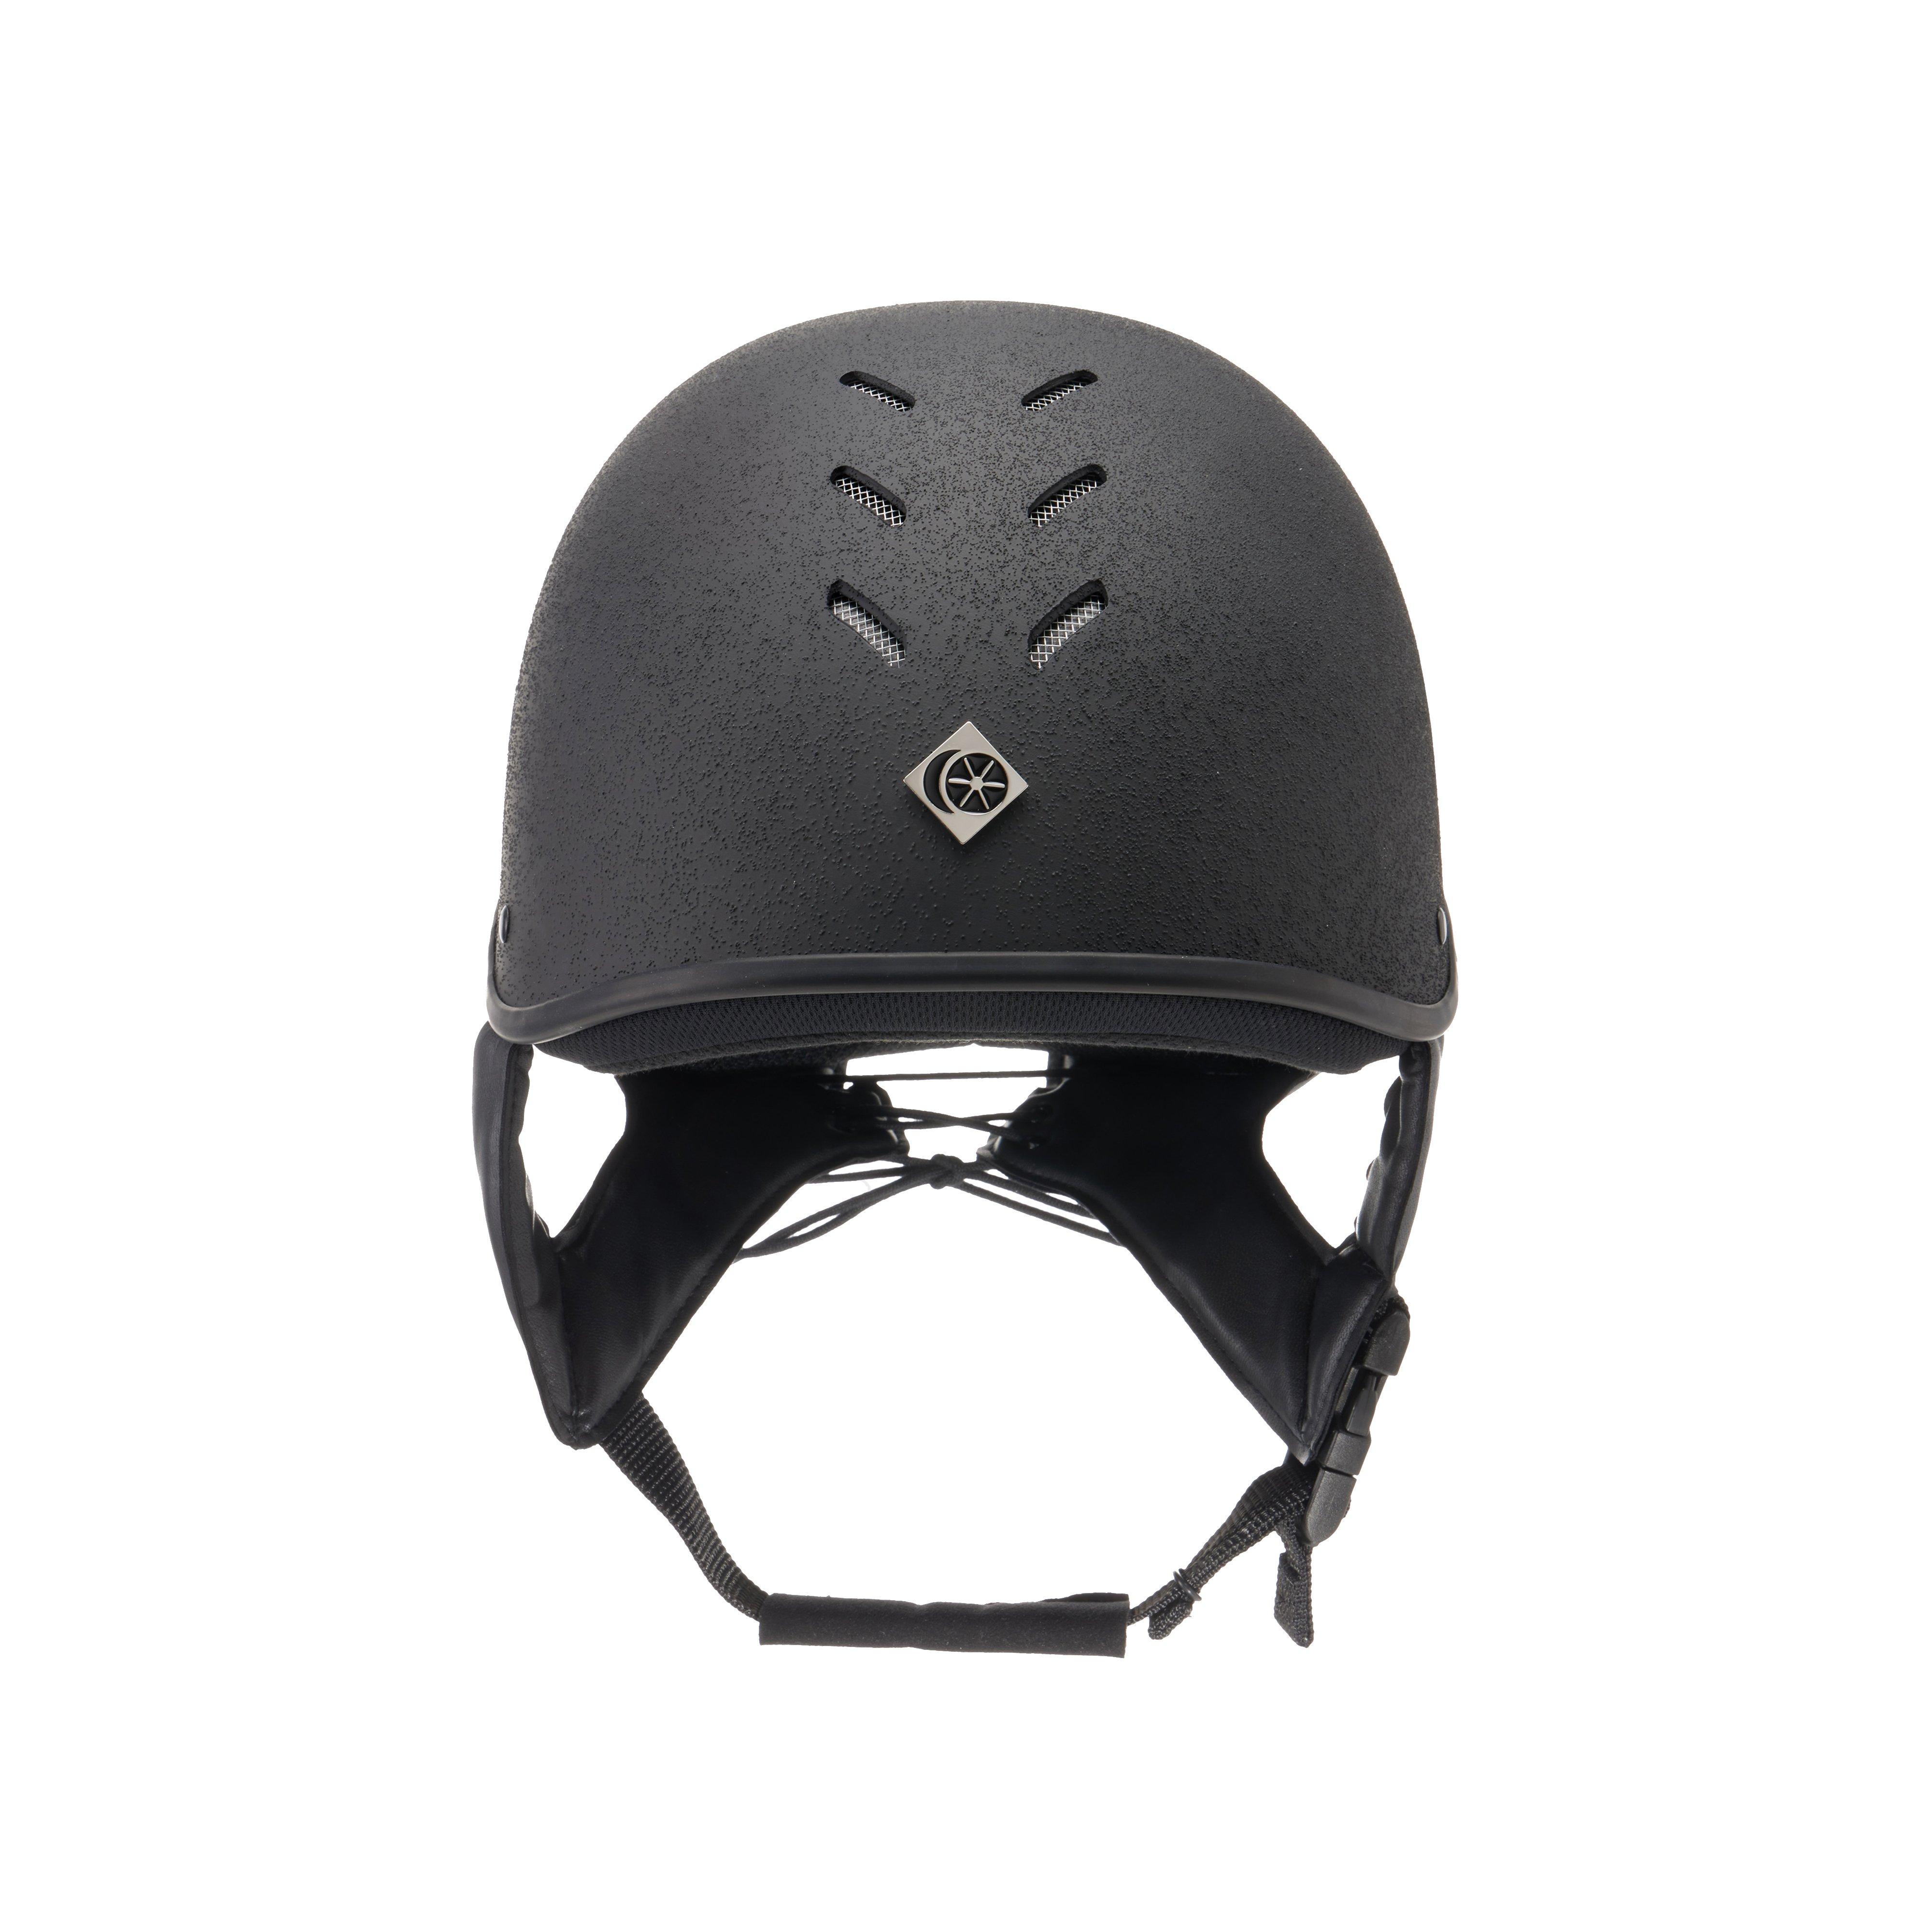 Adults JS1 Pro Skull Helmet Black